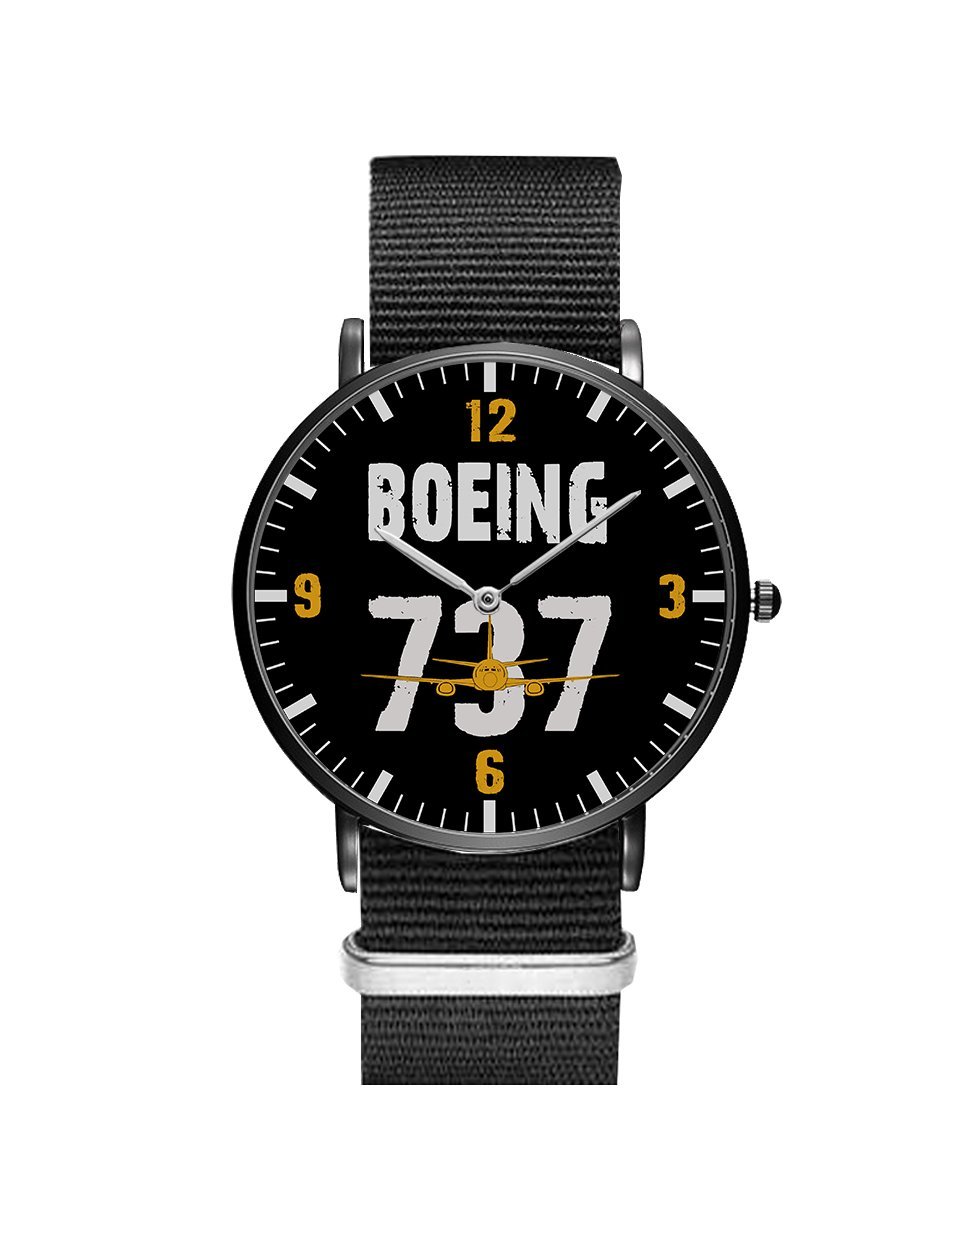 Boeing 737 Designed Leather Strap Watches Pilot Eyes Store Black & Black Nylon Strap 